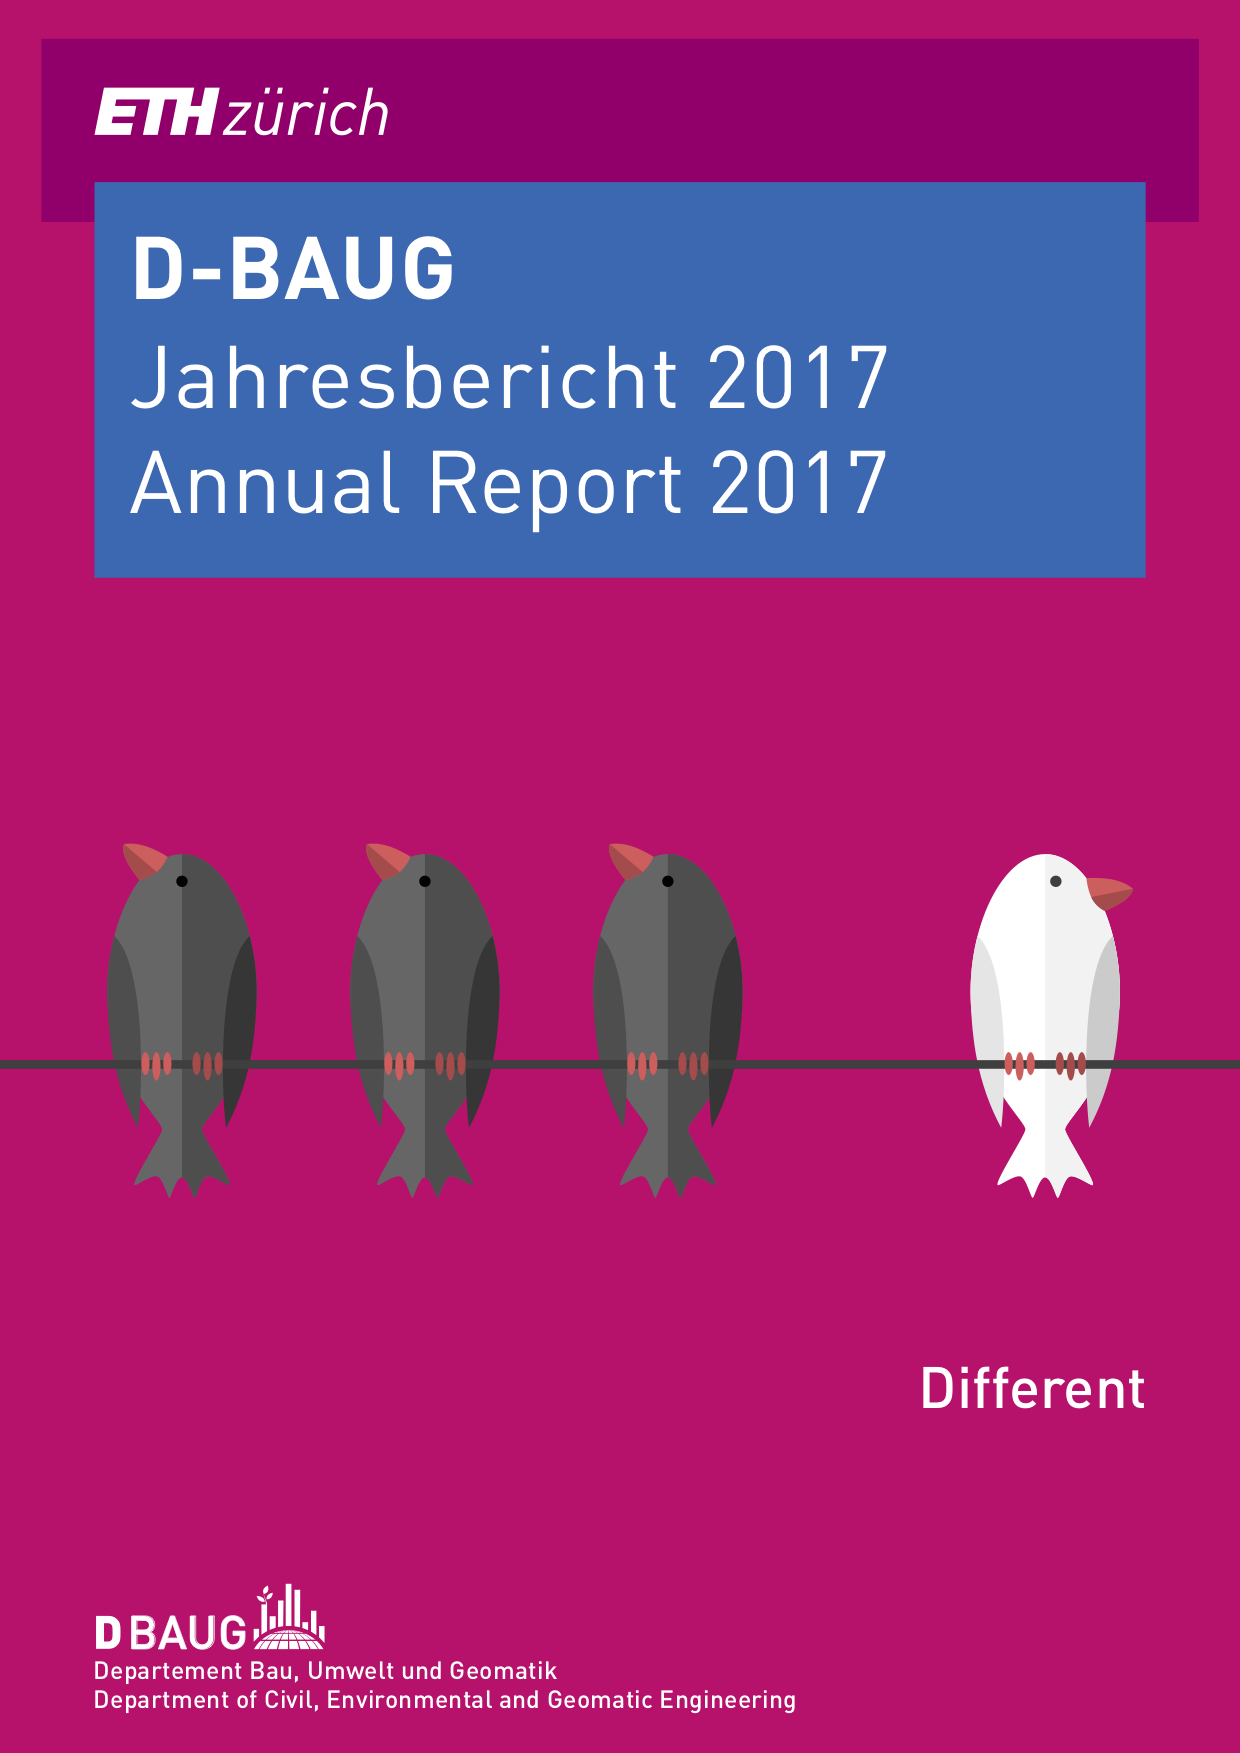 D-BAUG Annual report 2017